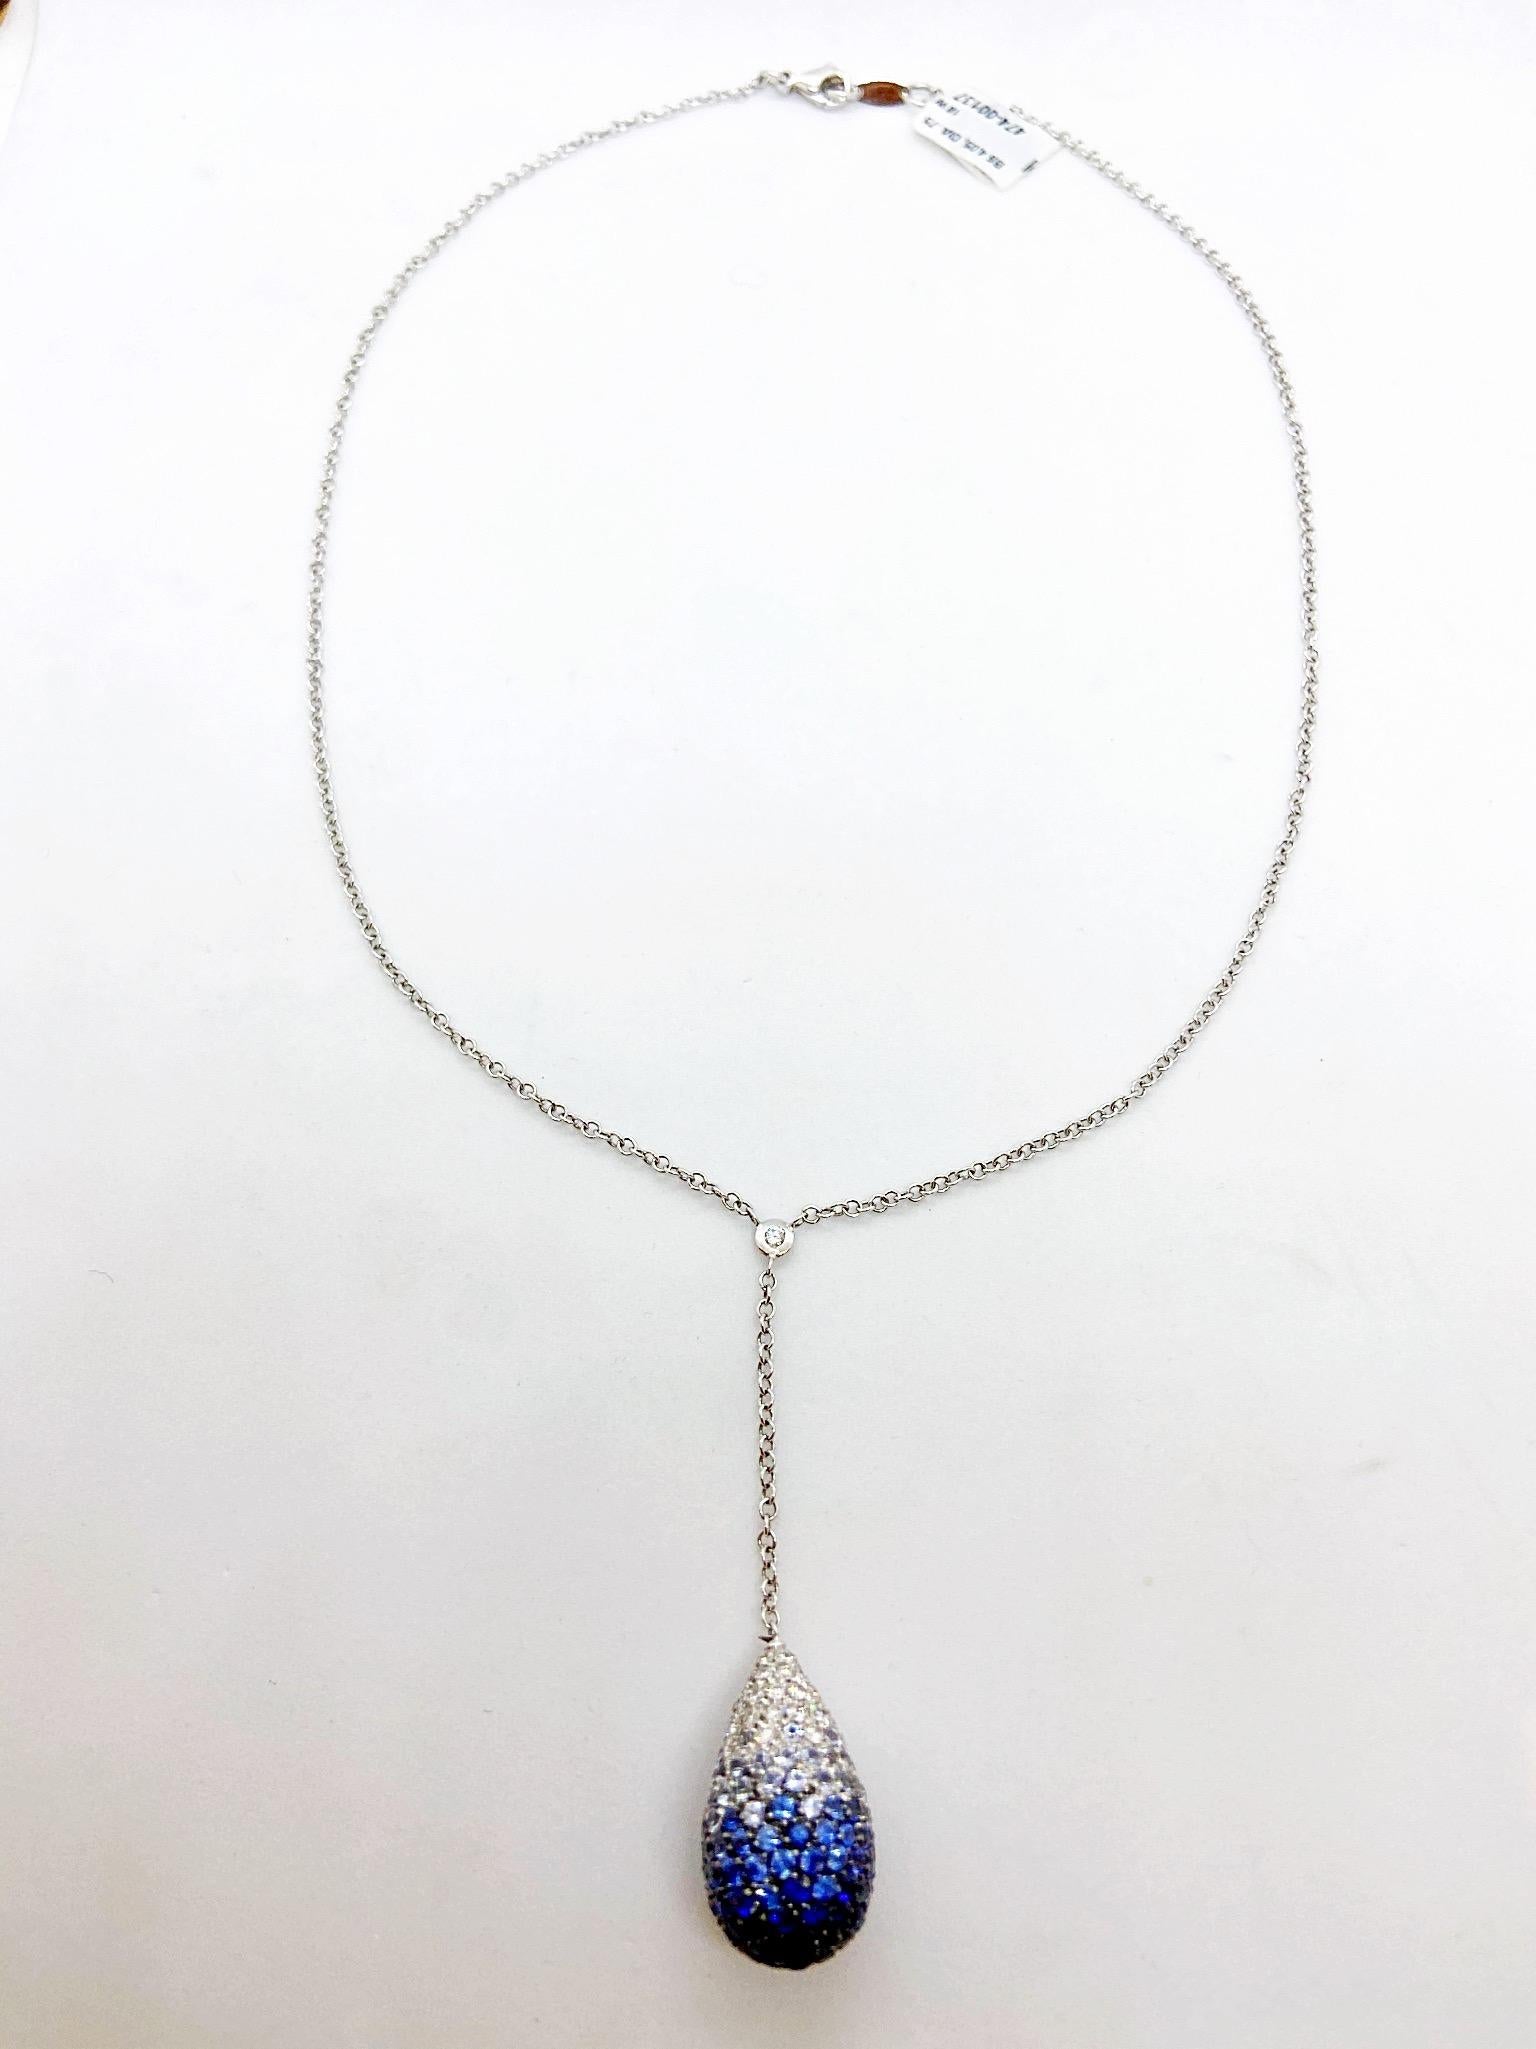 Round Cut Leo Pizzo White Gold Dew Drop Pendant 4.05Ct. Blue Sapphire & .75 Carat Diamond For Sale